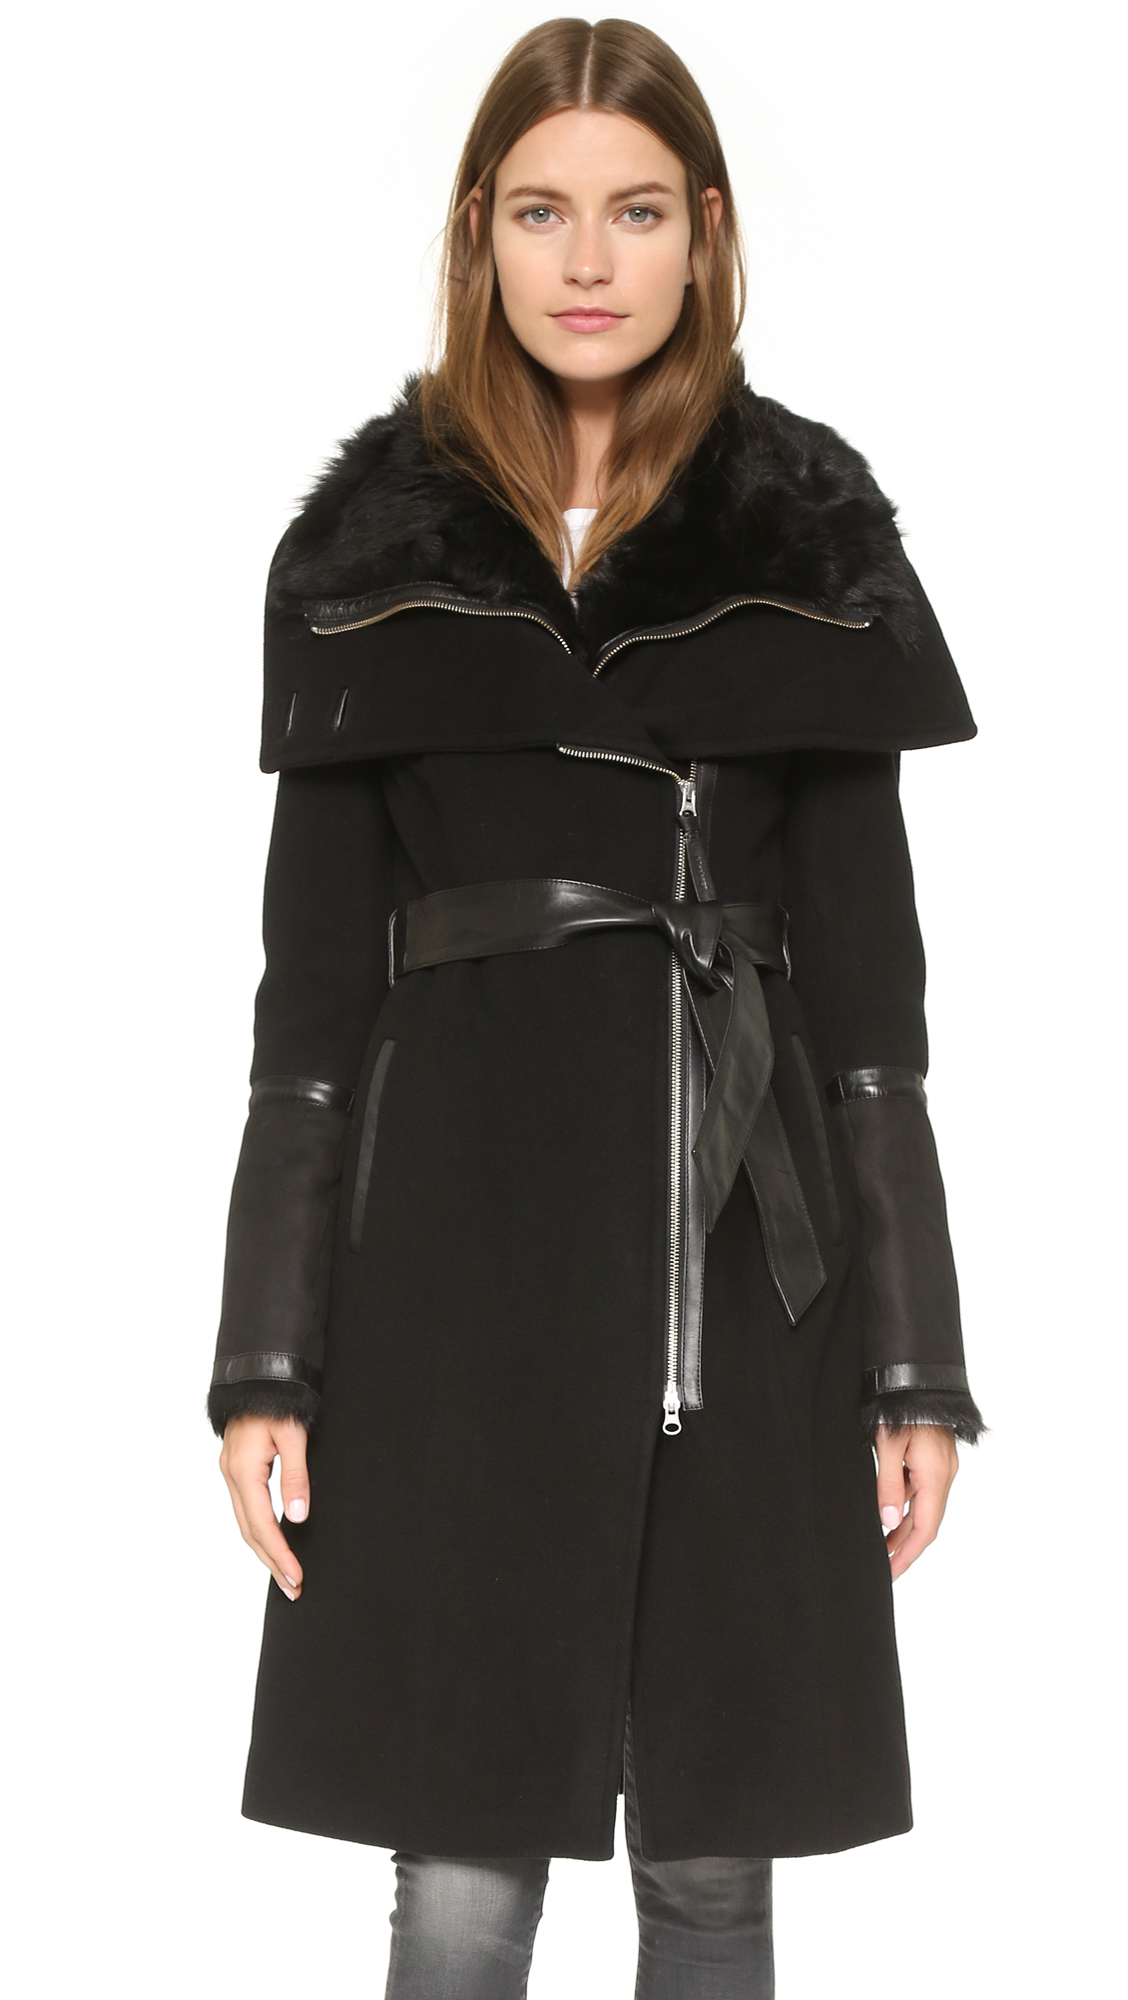 Lyst - Mackage Isabel Coat in Black